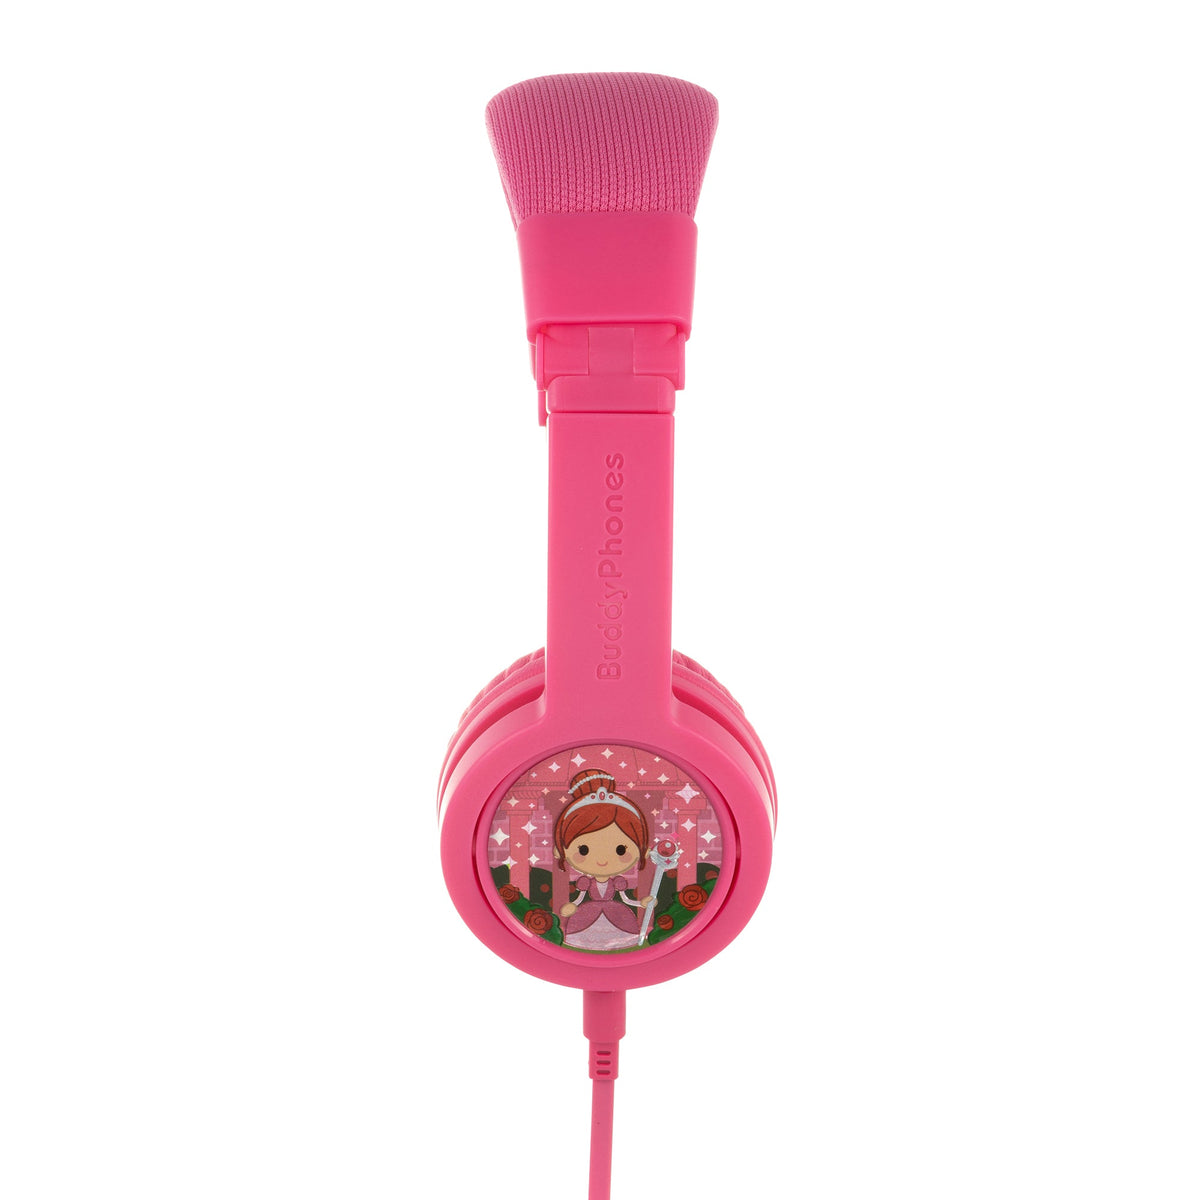 [OPEN BOX] BUDDYPHONES Explore Plus Foldable Headphones with Mic - Rose Pink